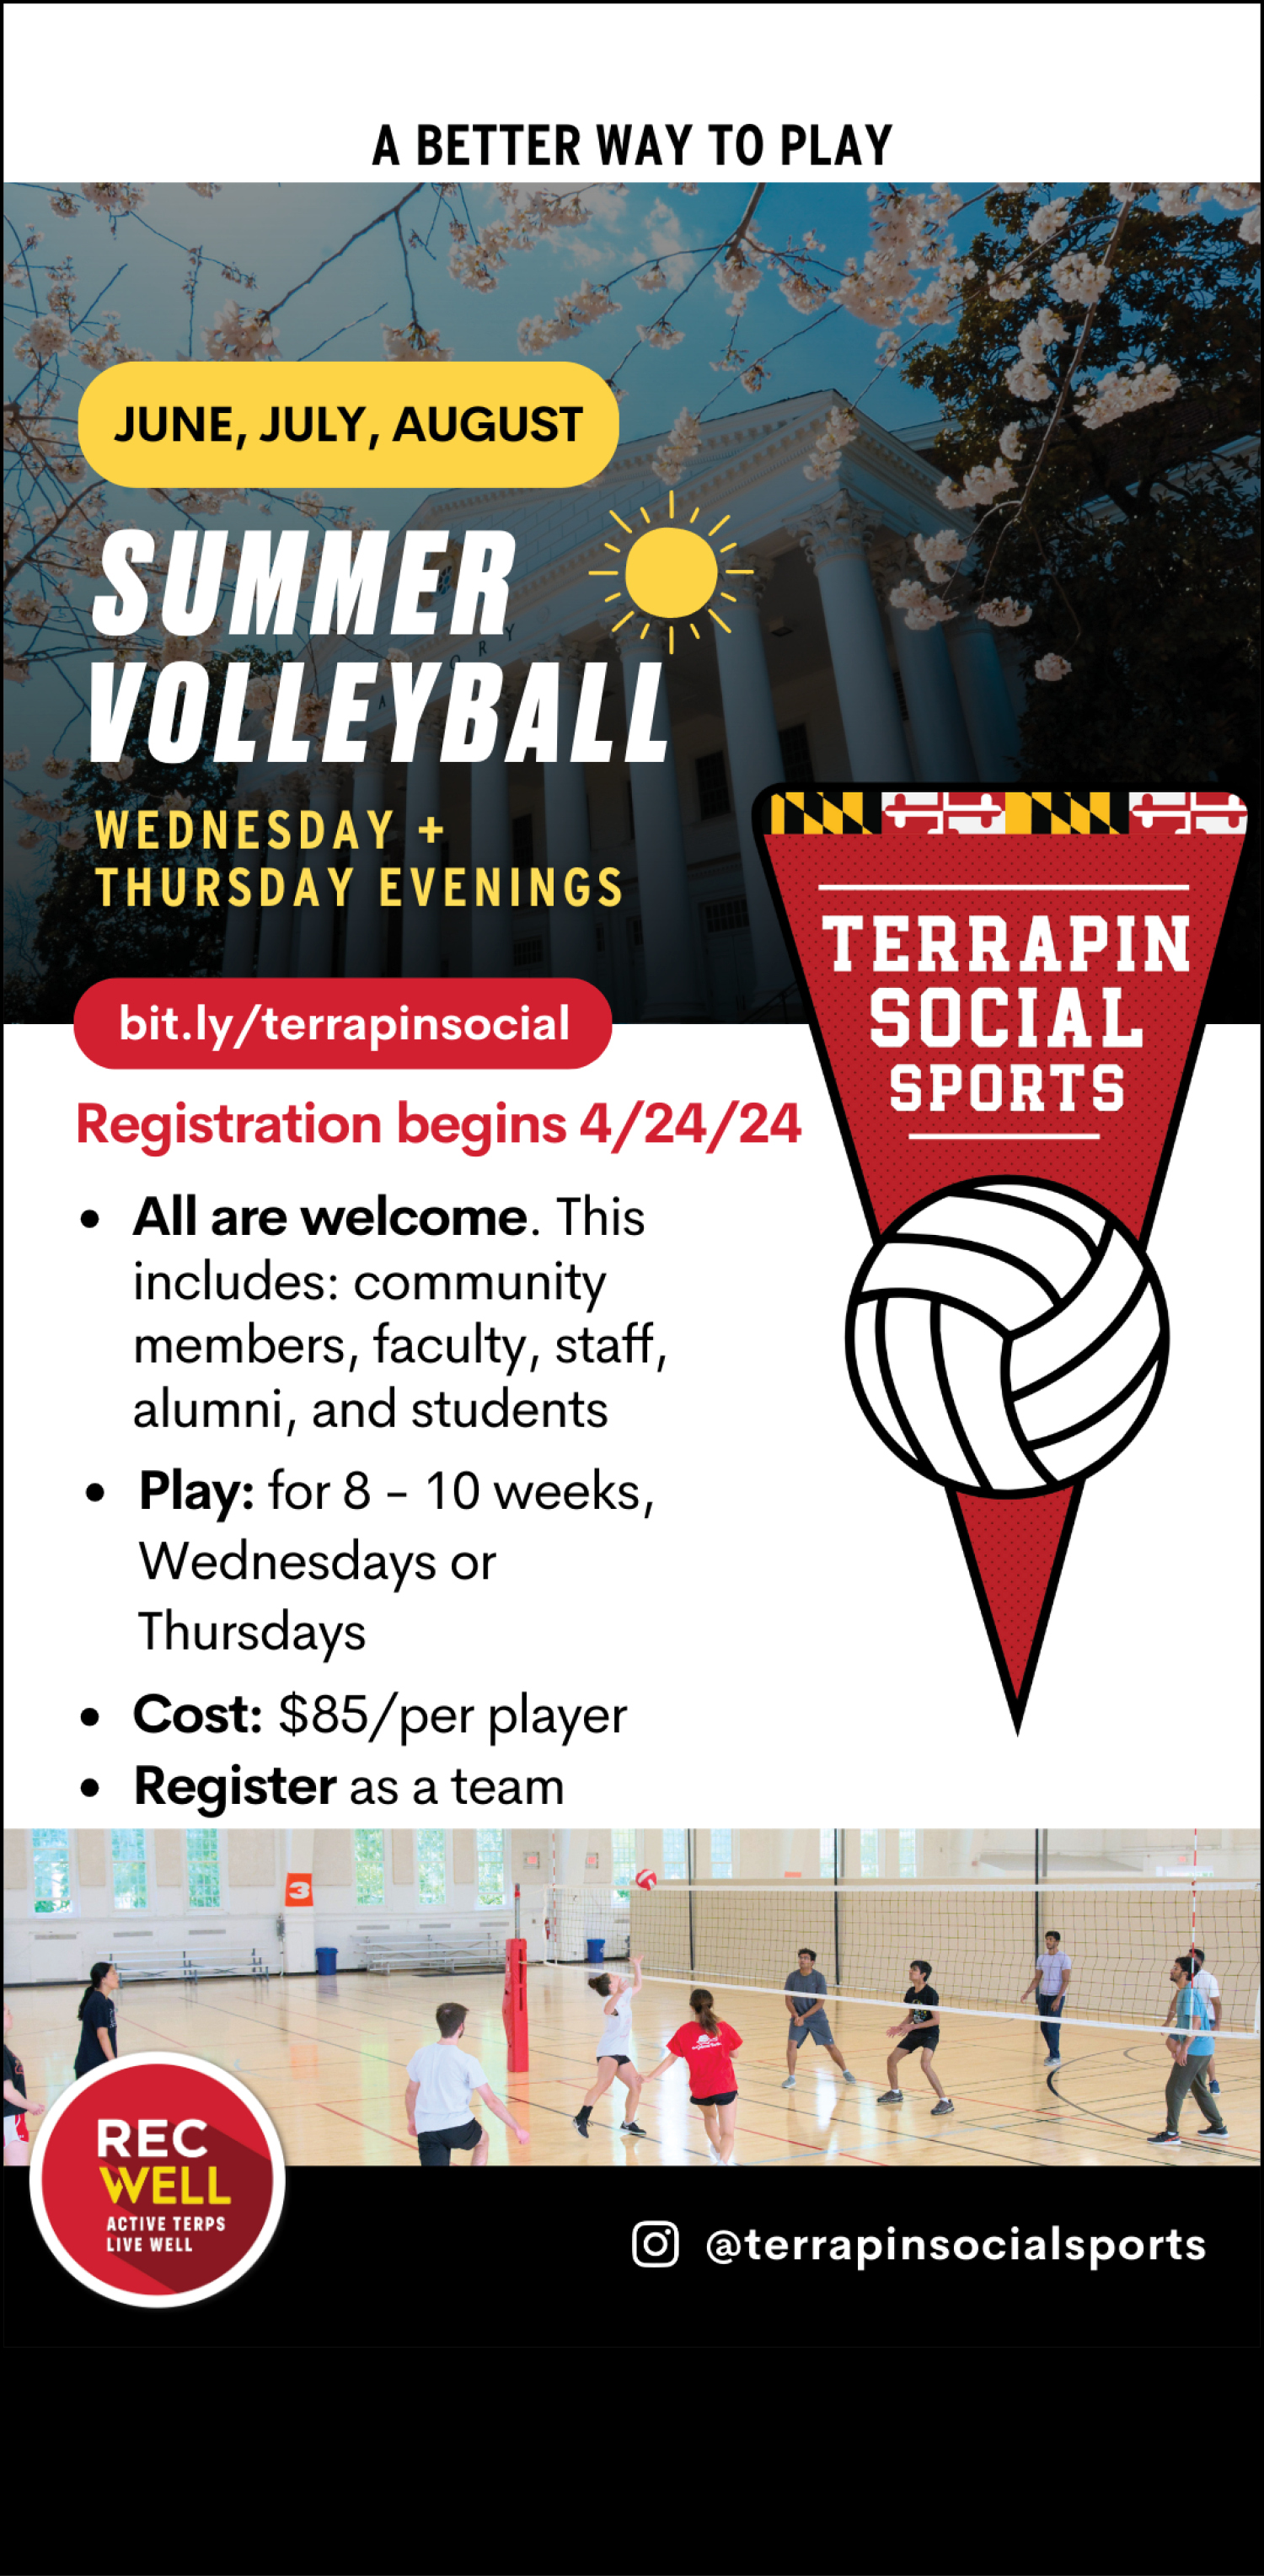 RecWell: Terrapin Social Sports: Volleyball